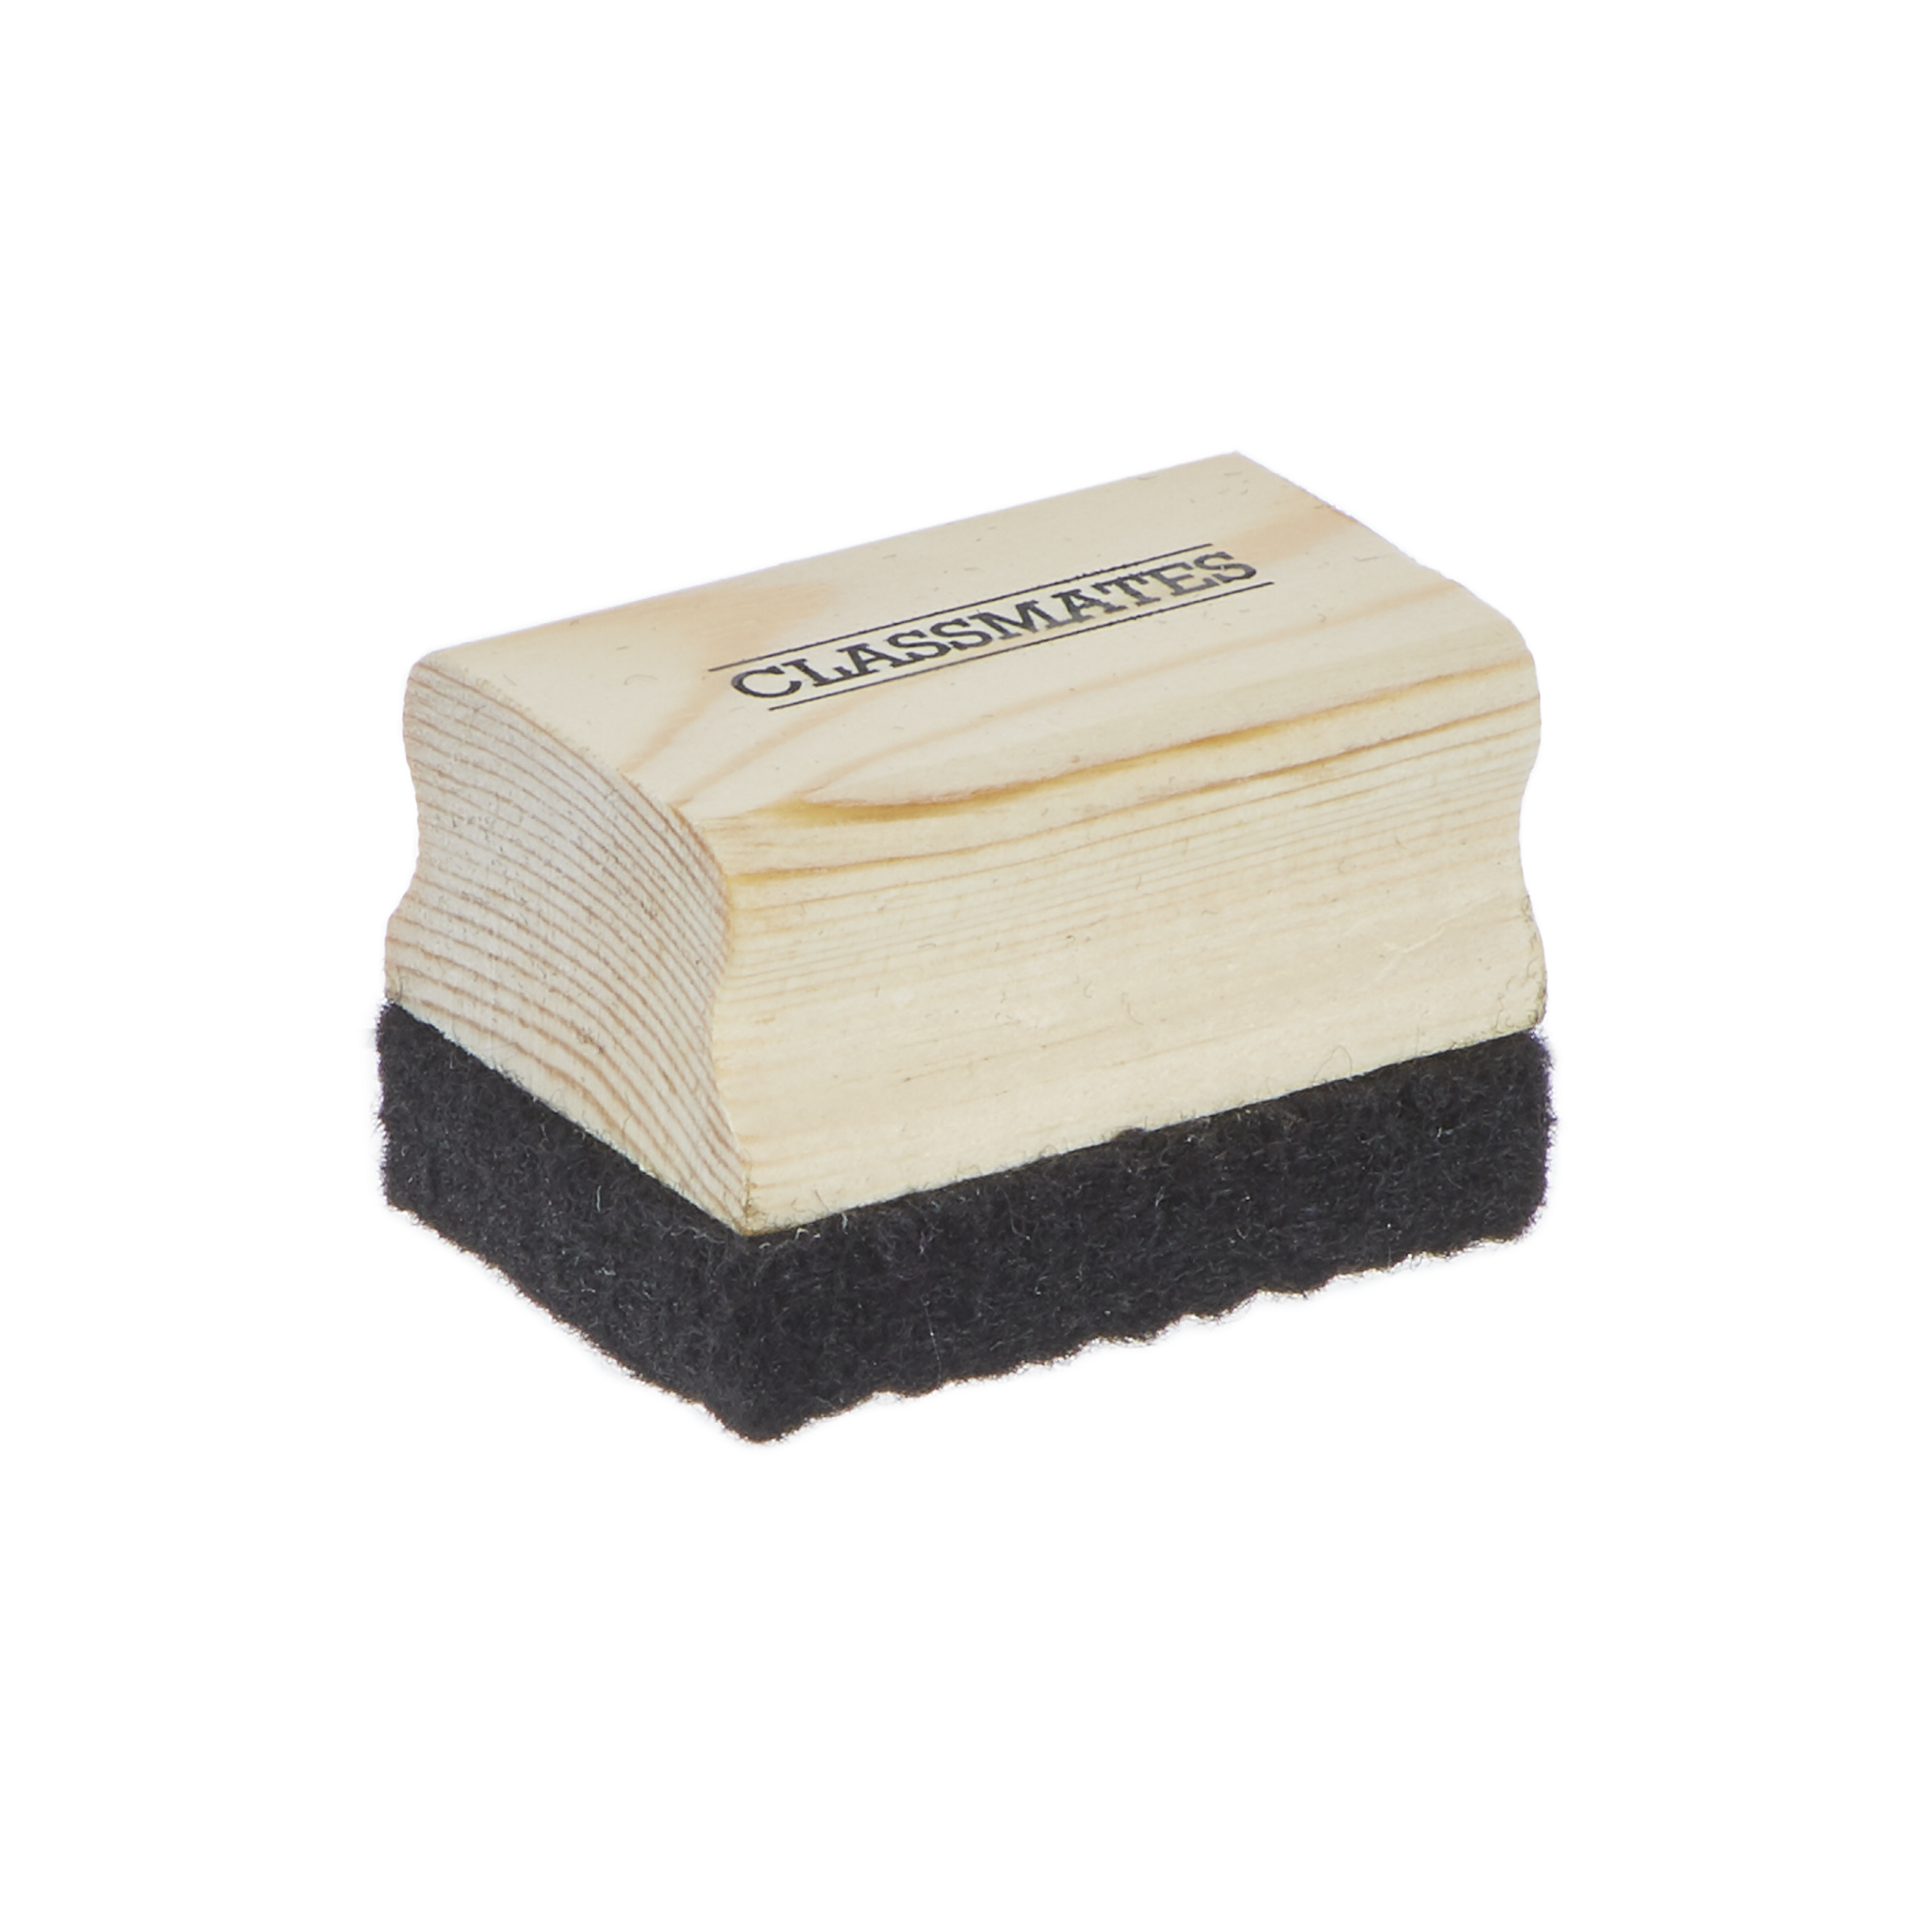 dry erase board erasers mini